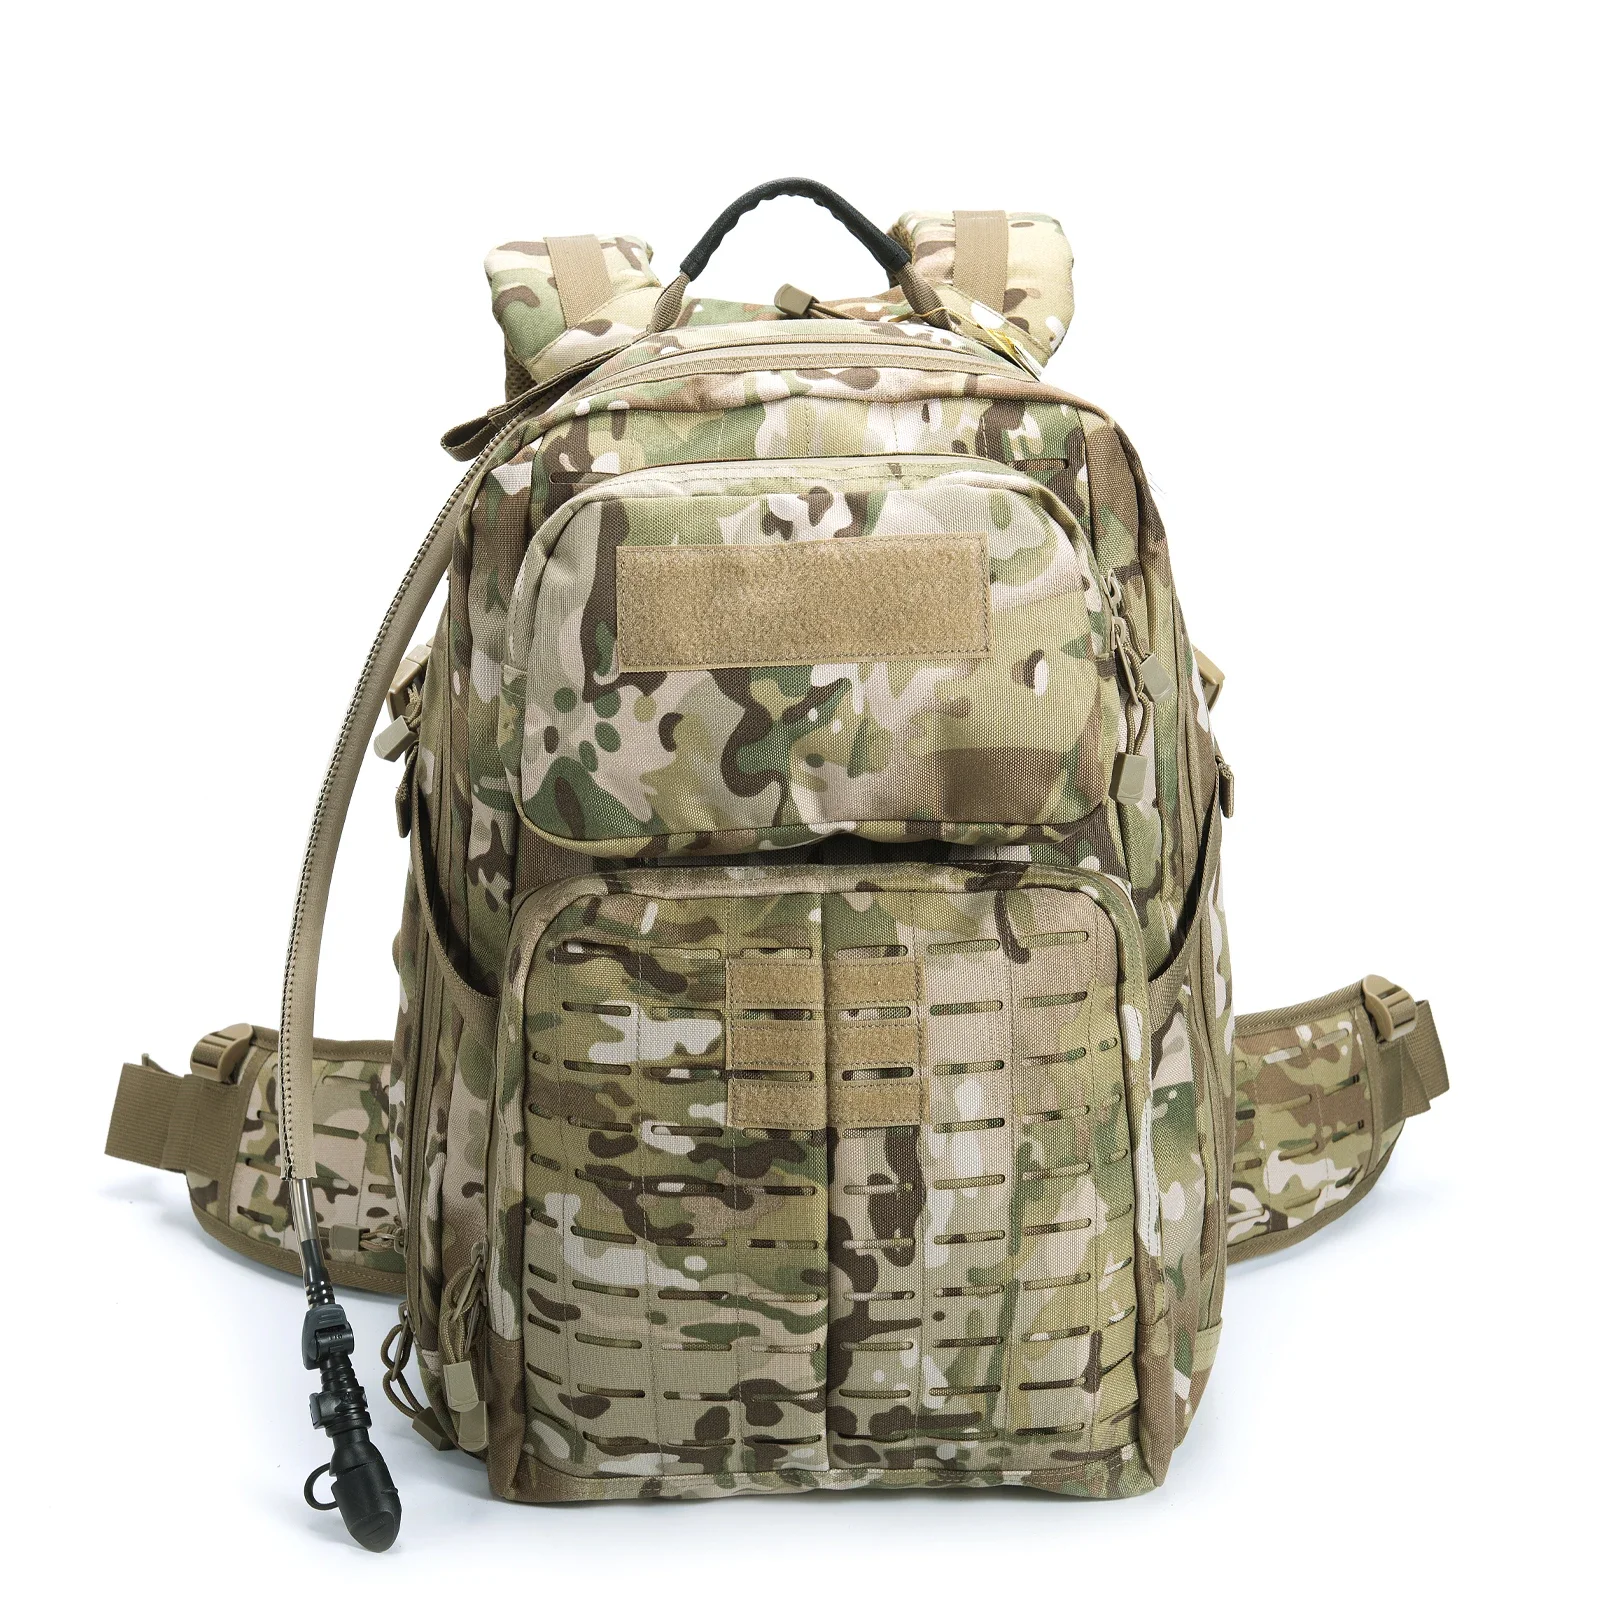 

MT Adventure 48H Military Rucksack MOLLE 2 Bag Camping equipment Men's backpack light backpack 3 days Assault Pack Bags